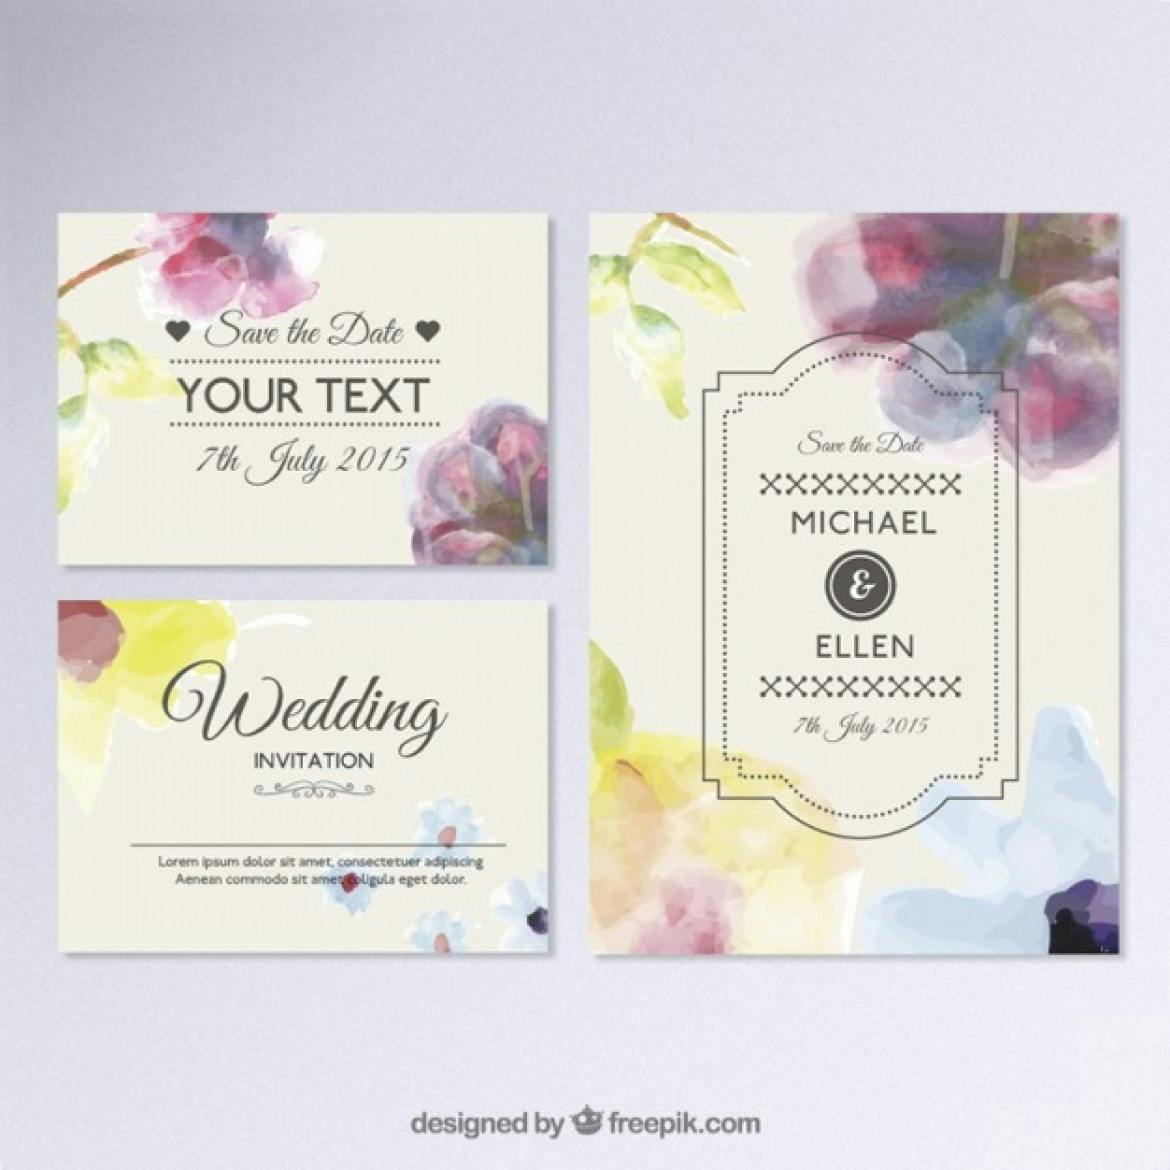 wpid-hand-painted-wedding-invitation_23-2147510280-1170x1170